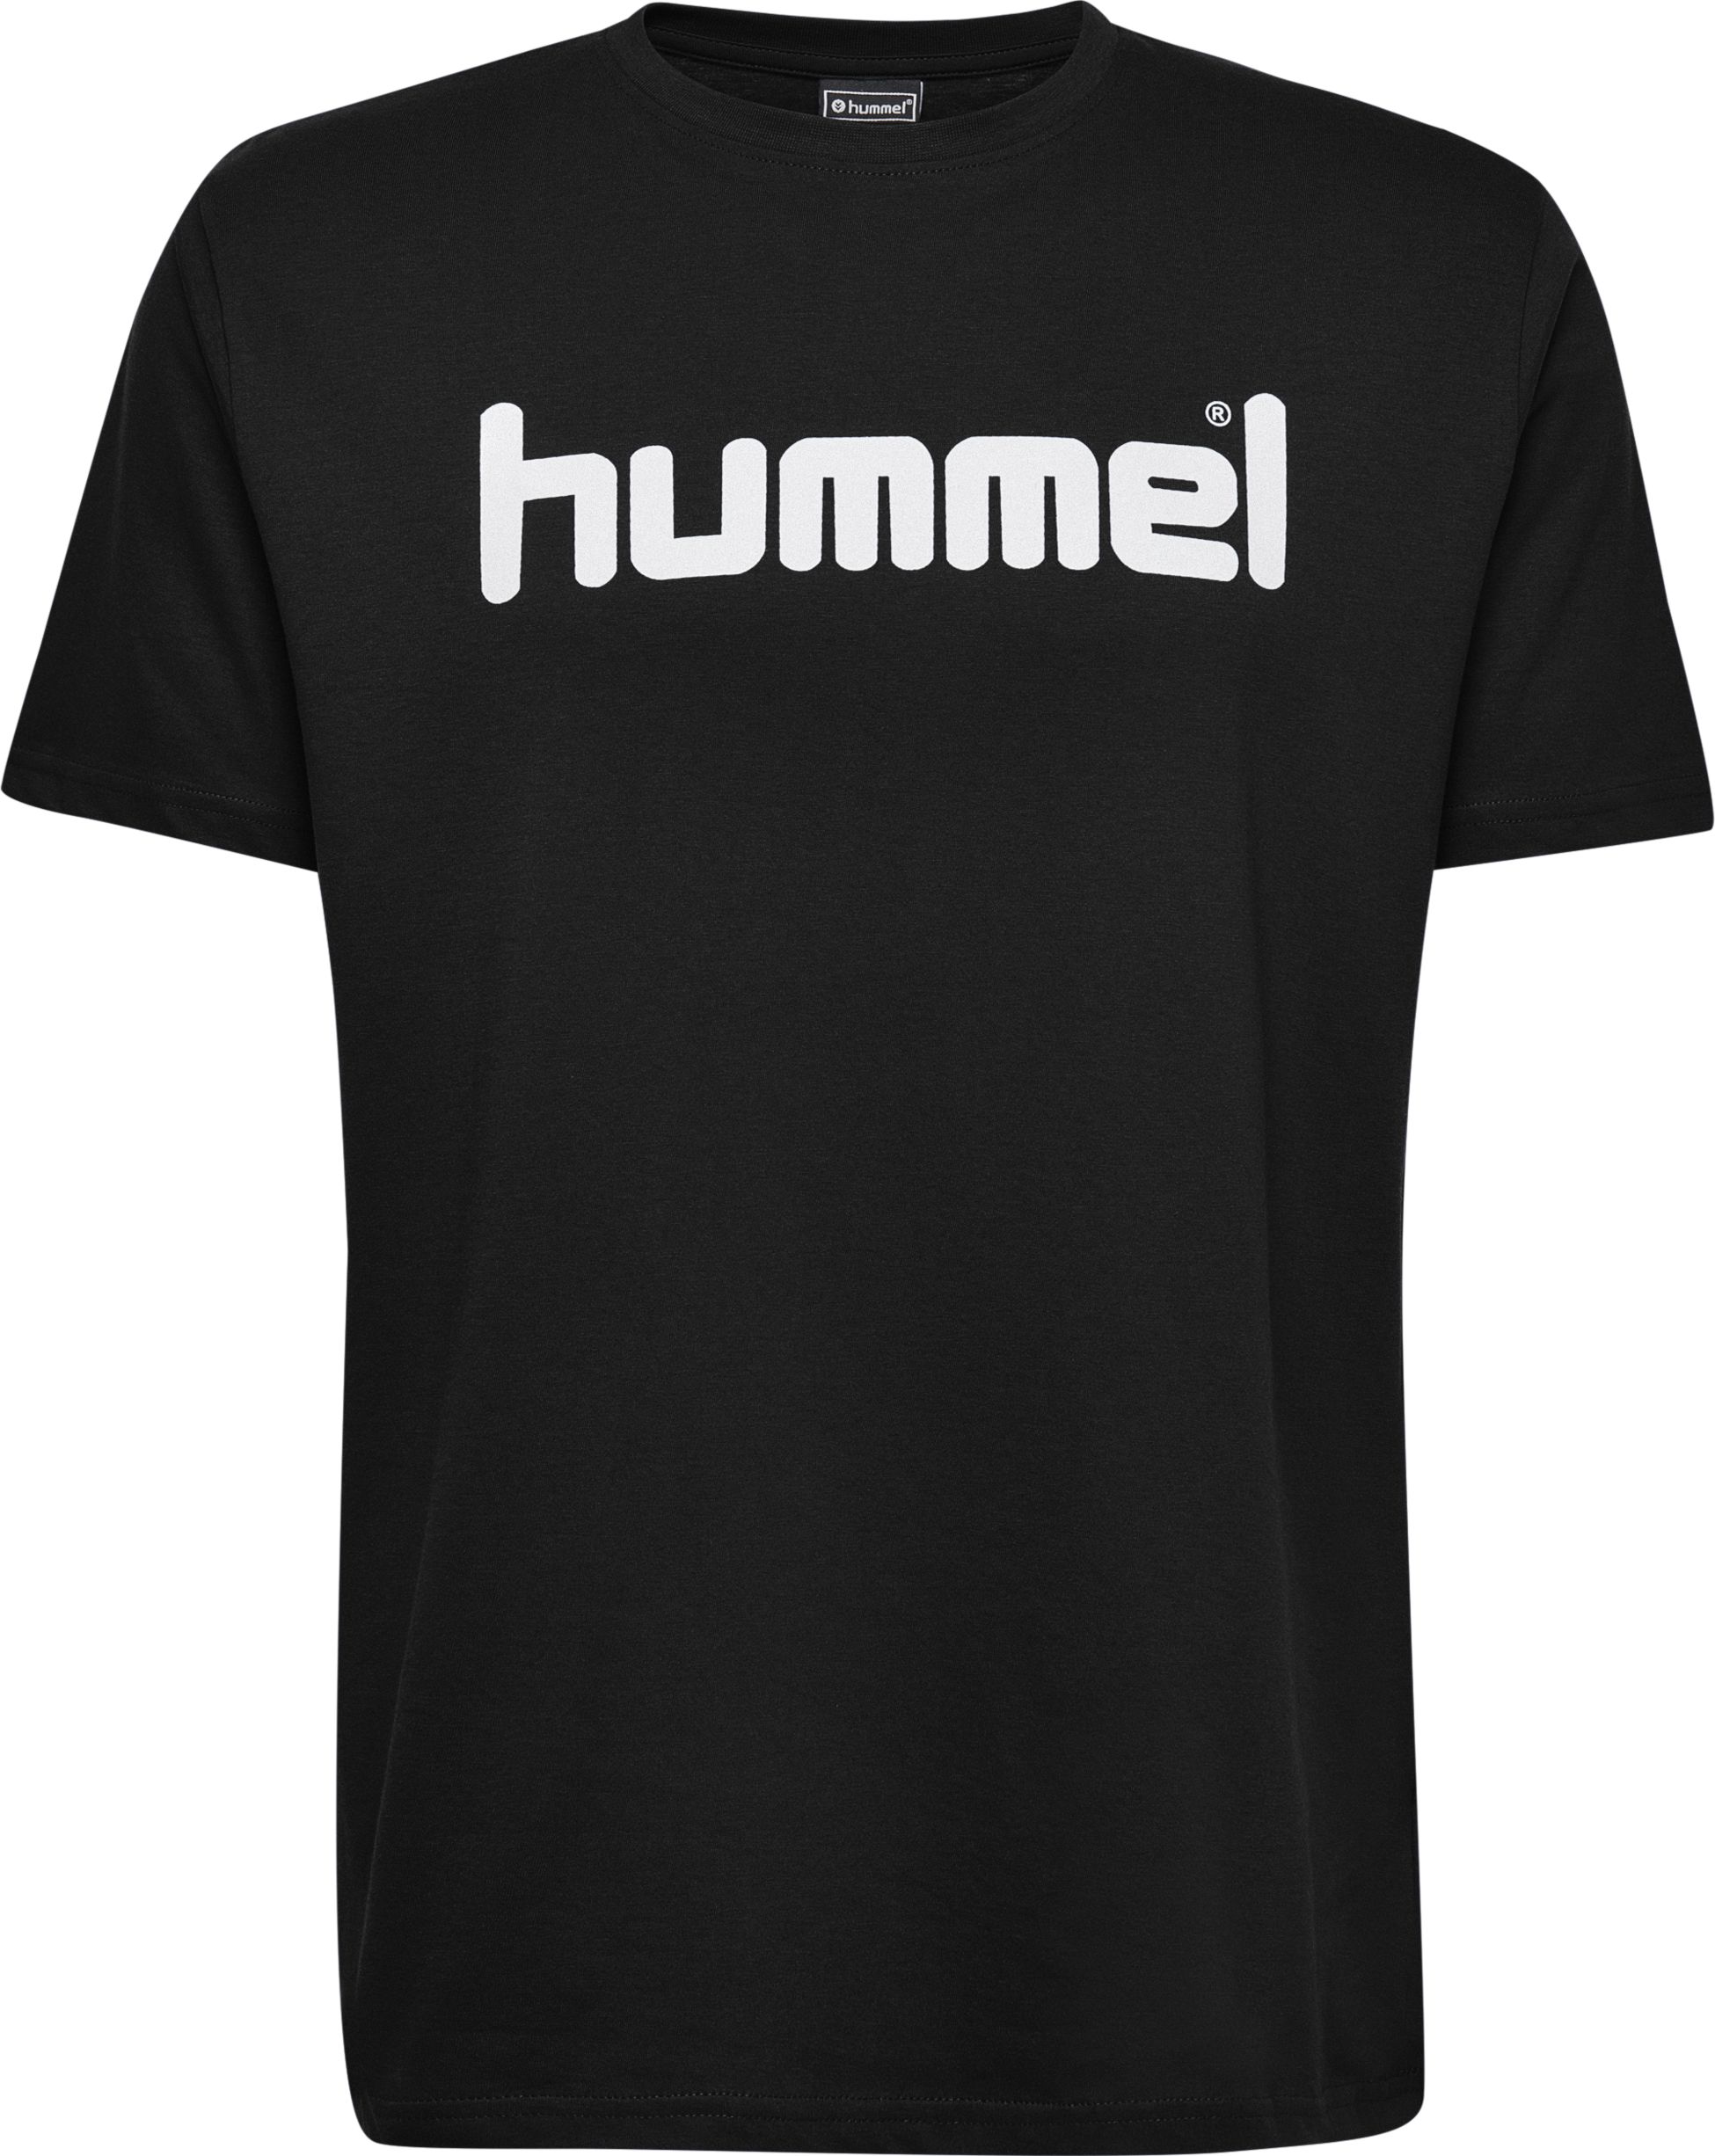 HUMMEL, LGO COTTN T-Shirt